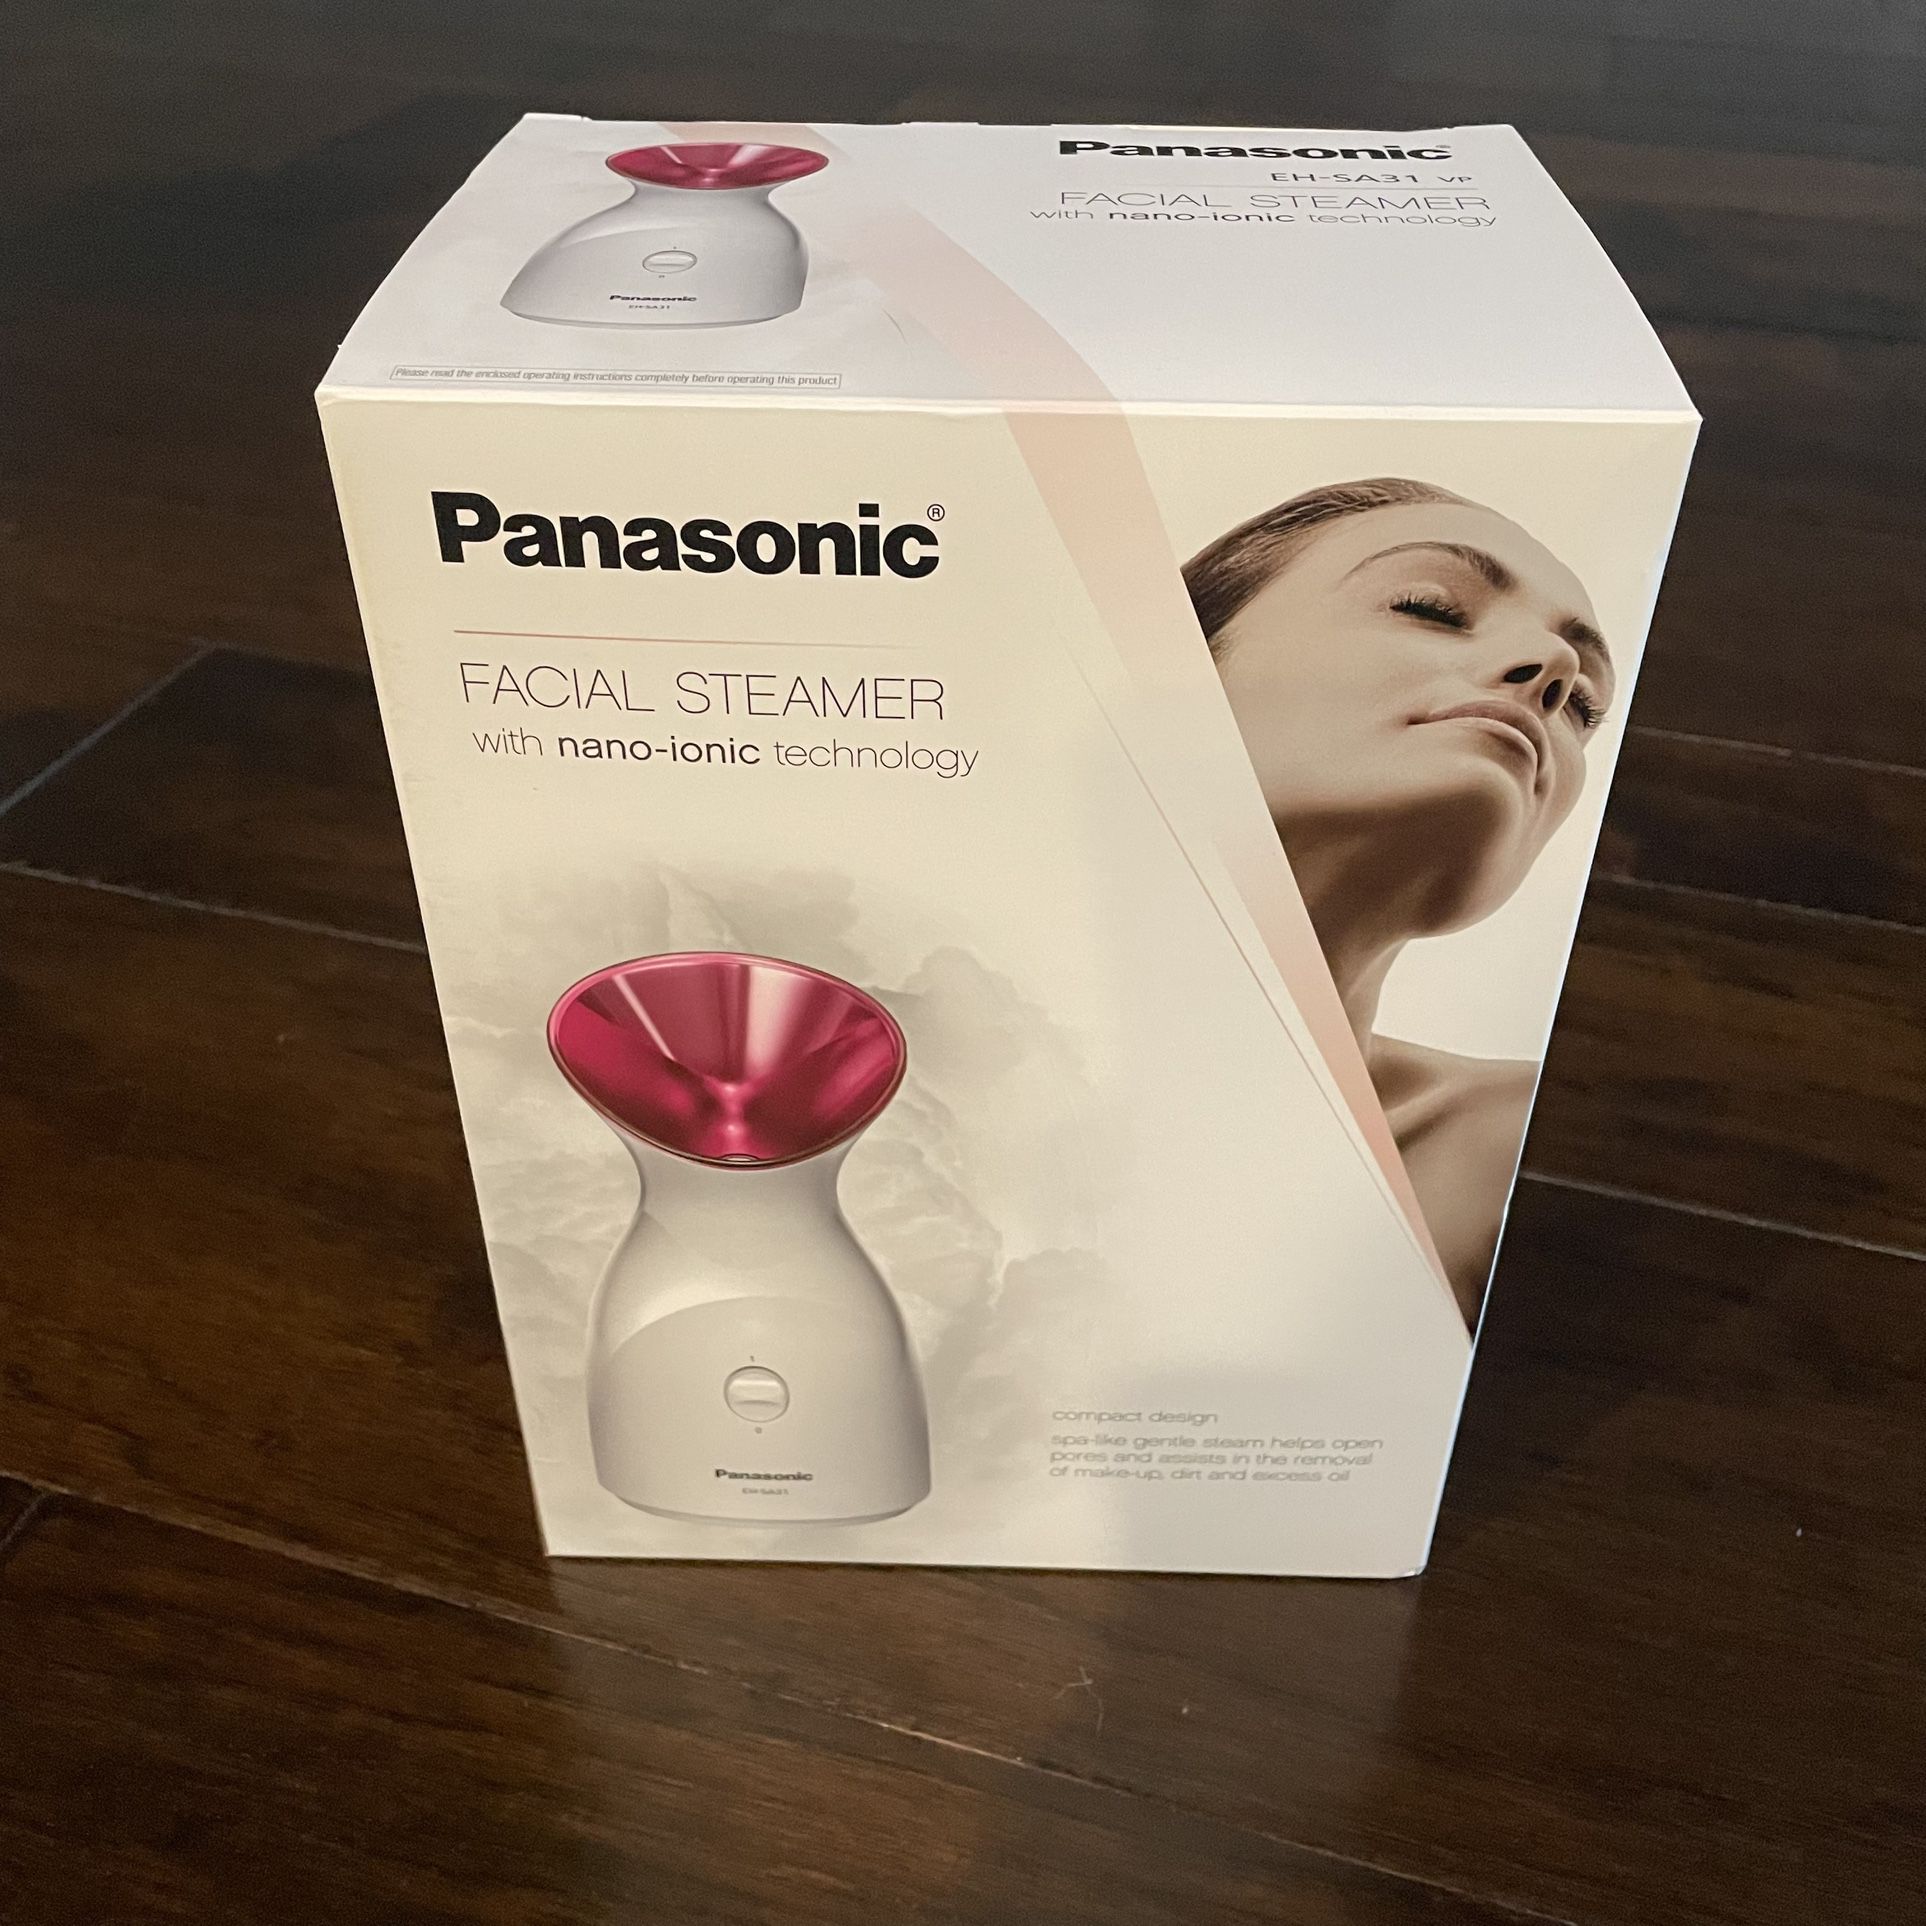 Panasonic facial steamer